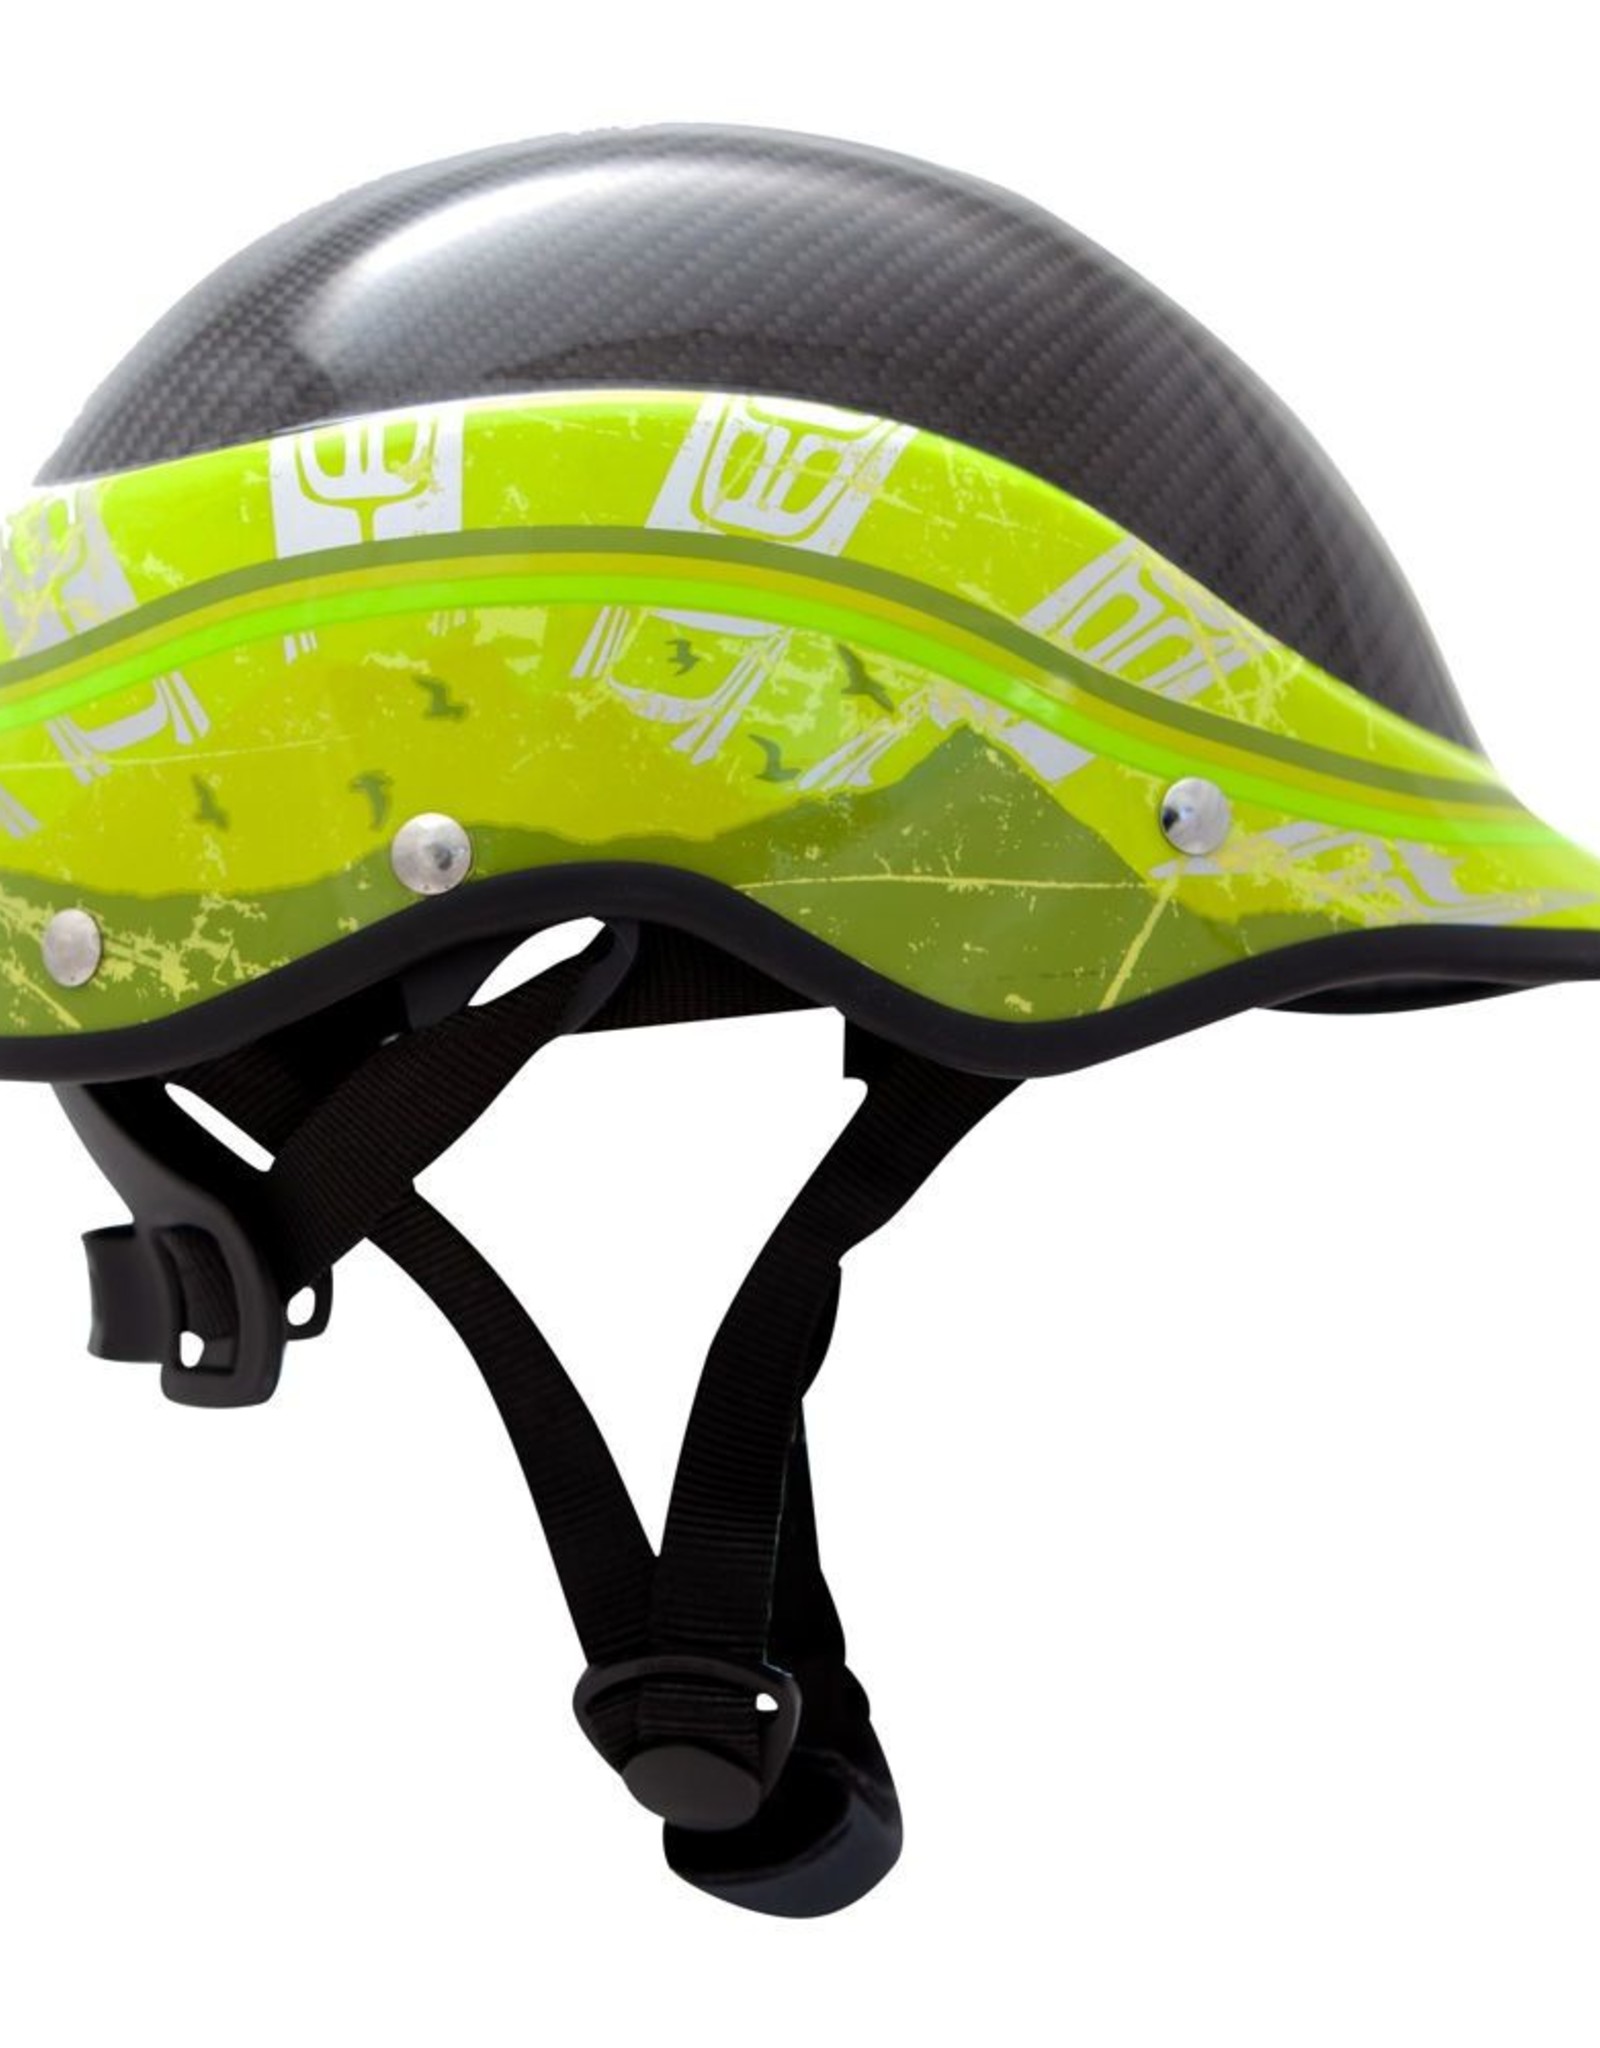 WRSI WRSI Trident Composite Helmet